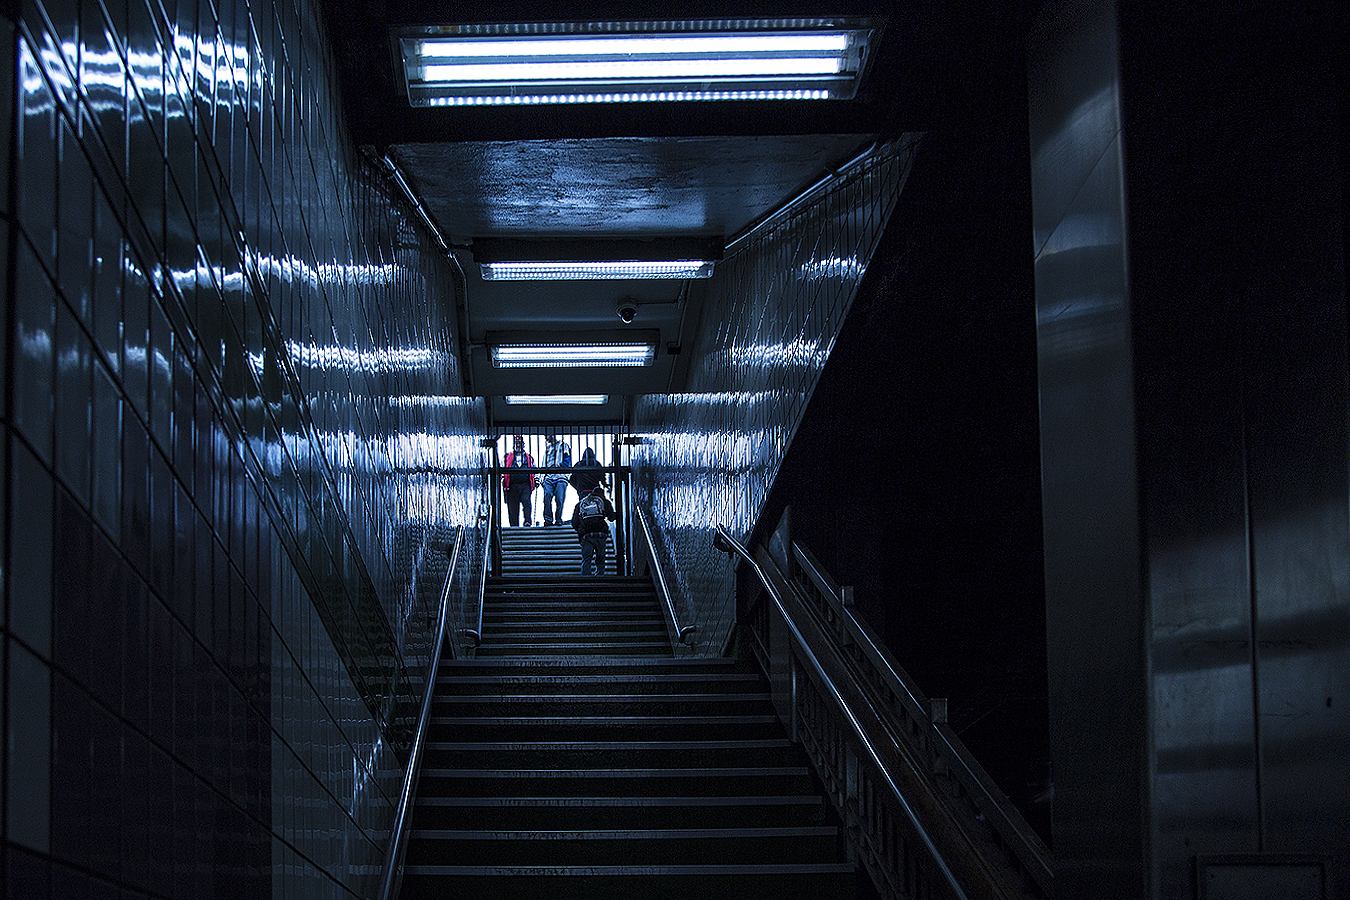 Jacob_Bennett_photography_transience_train_travel_philadelphia_commuters_platforms_danger_blur